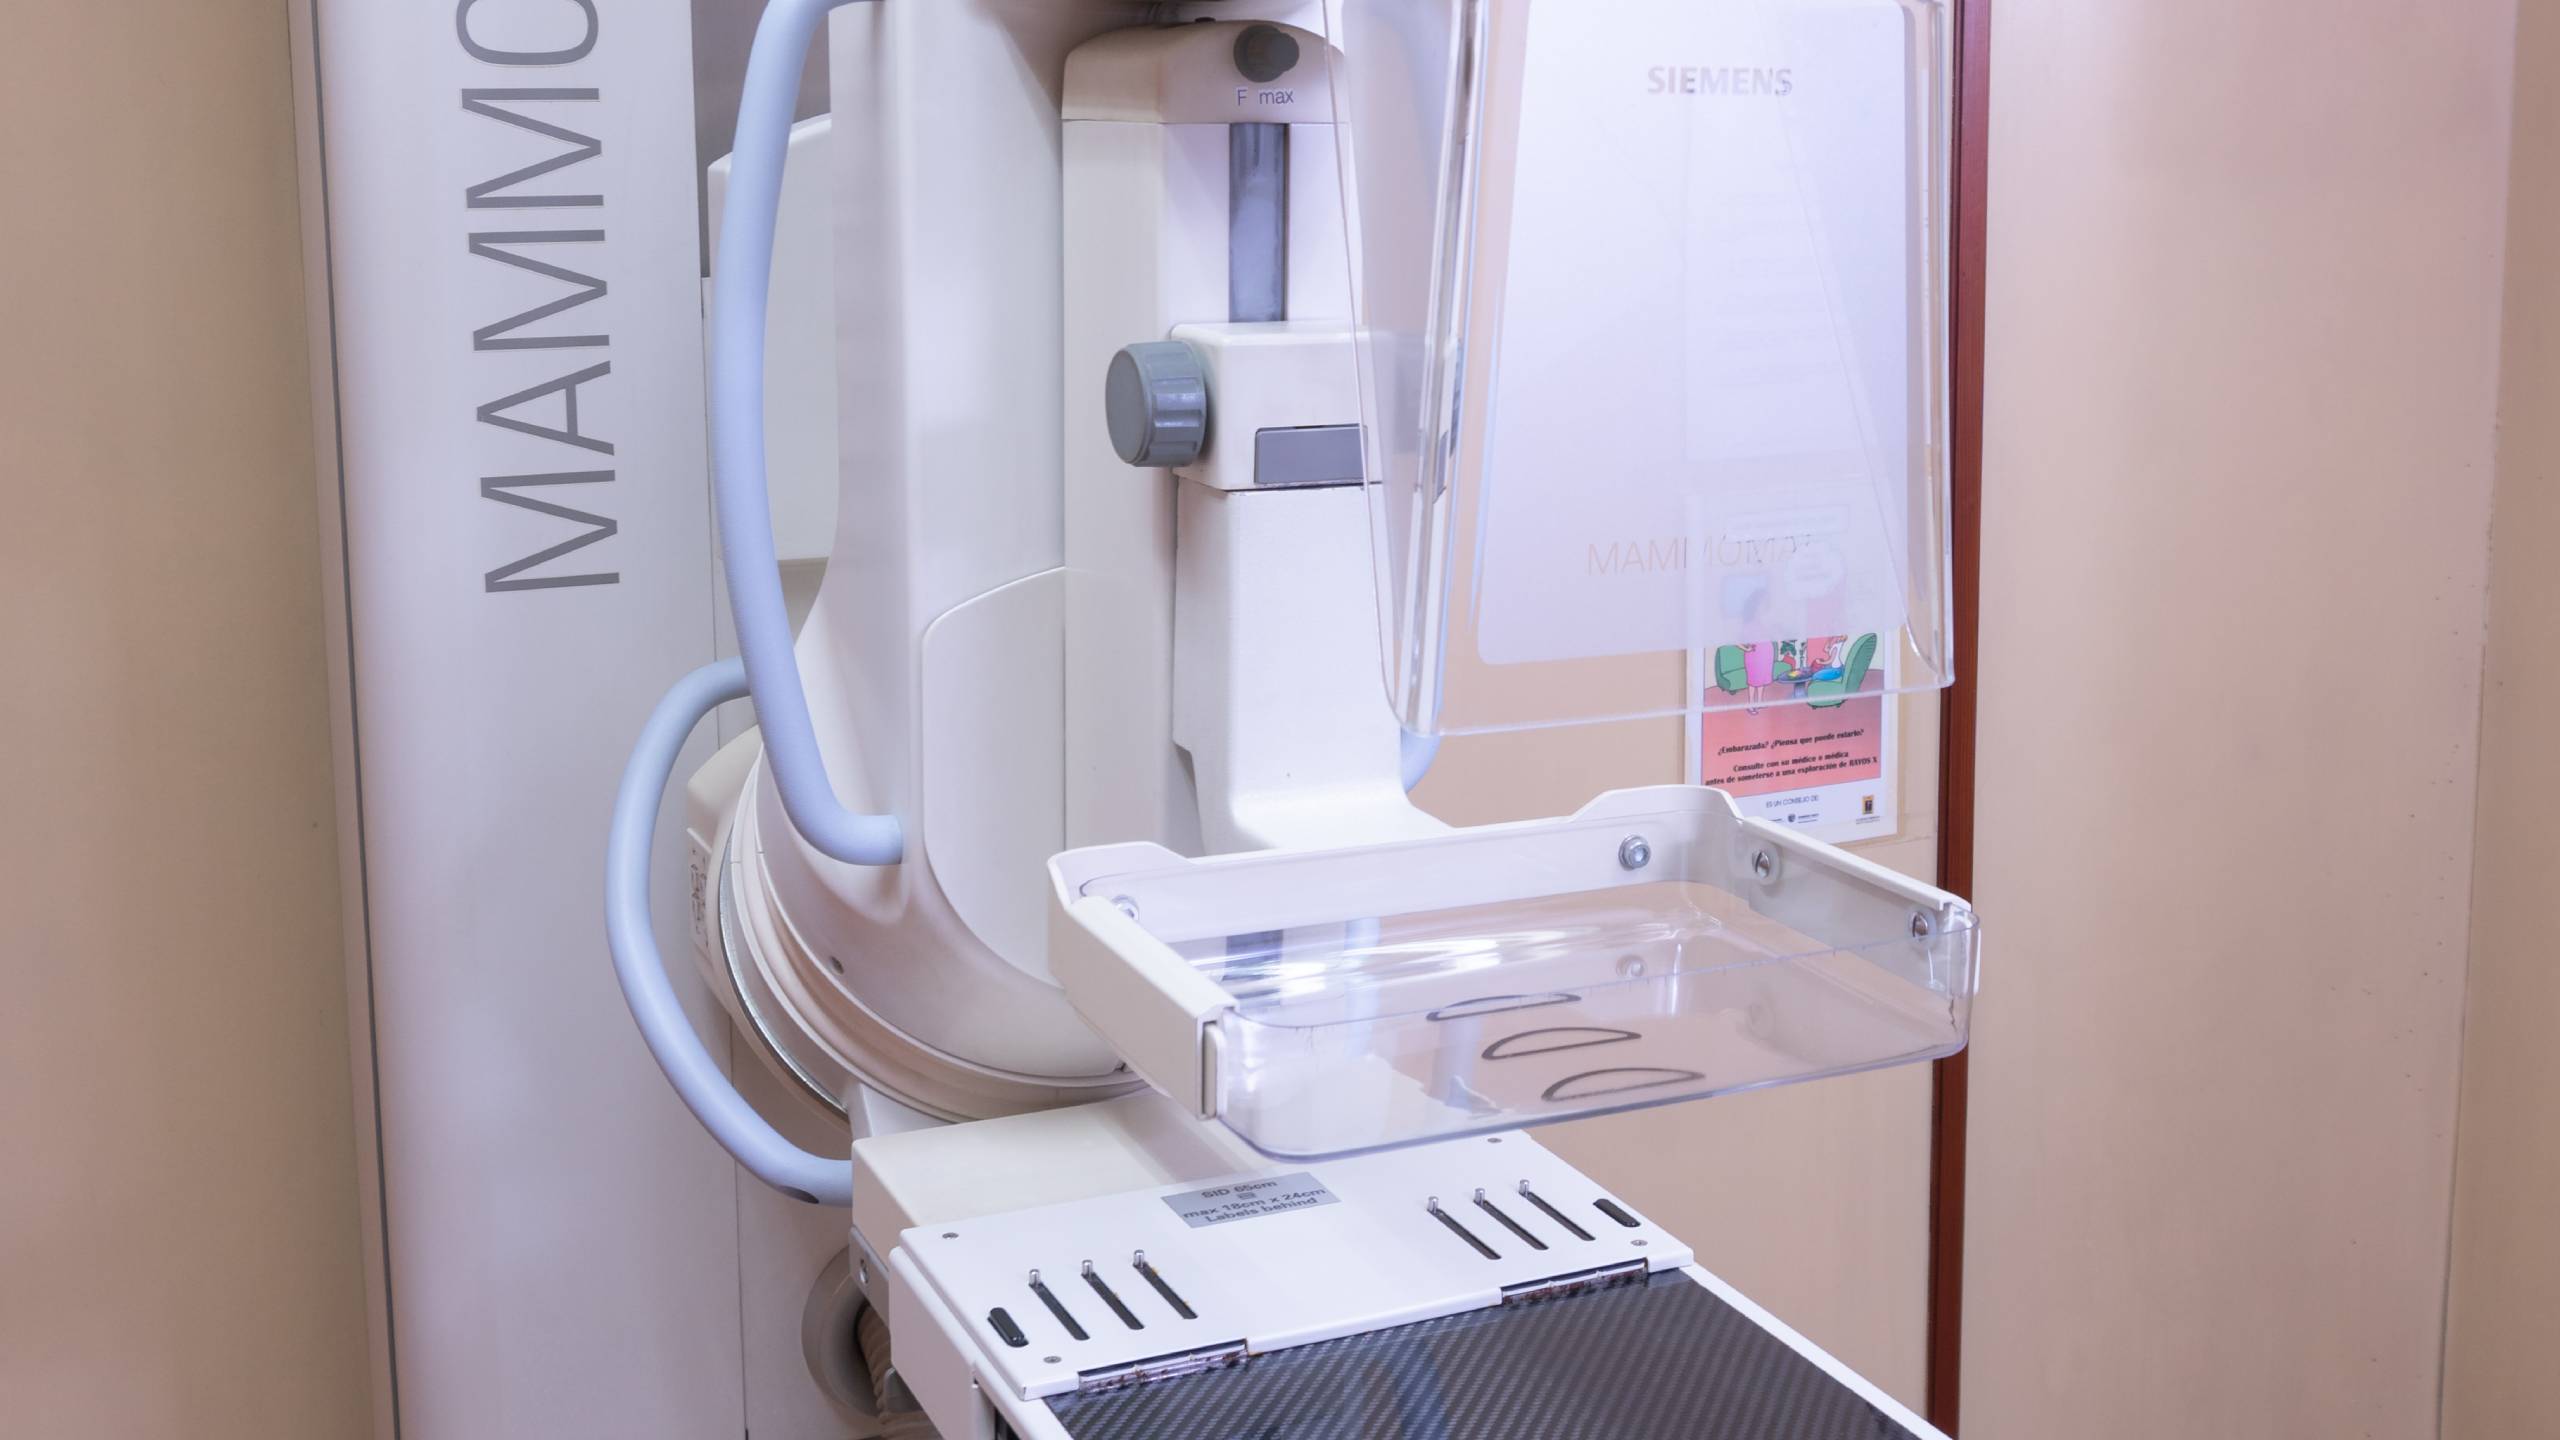 Centro Medico Urbieta Mamografia